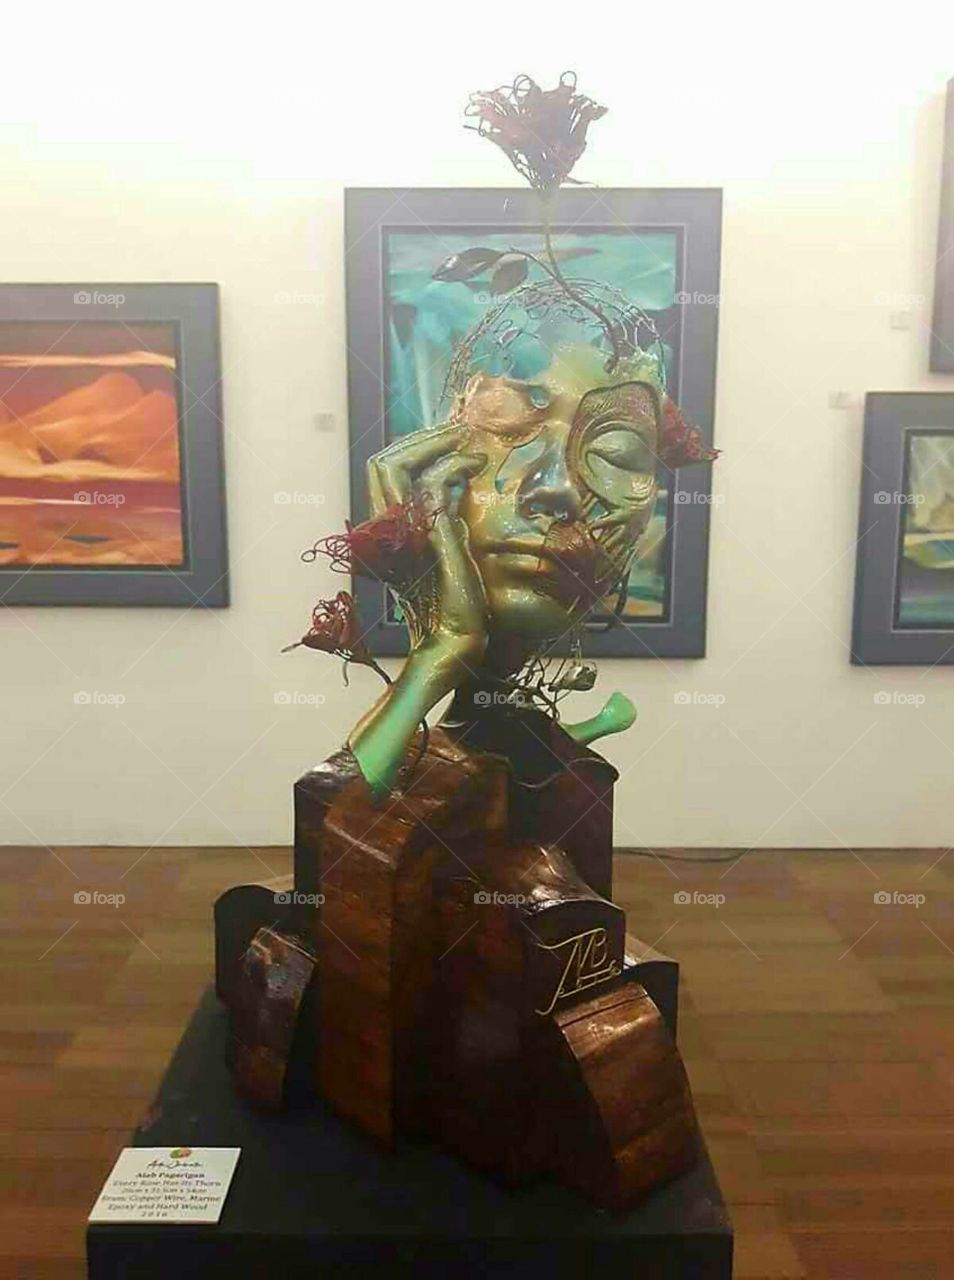 Art at an art museum, Philippines